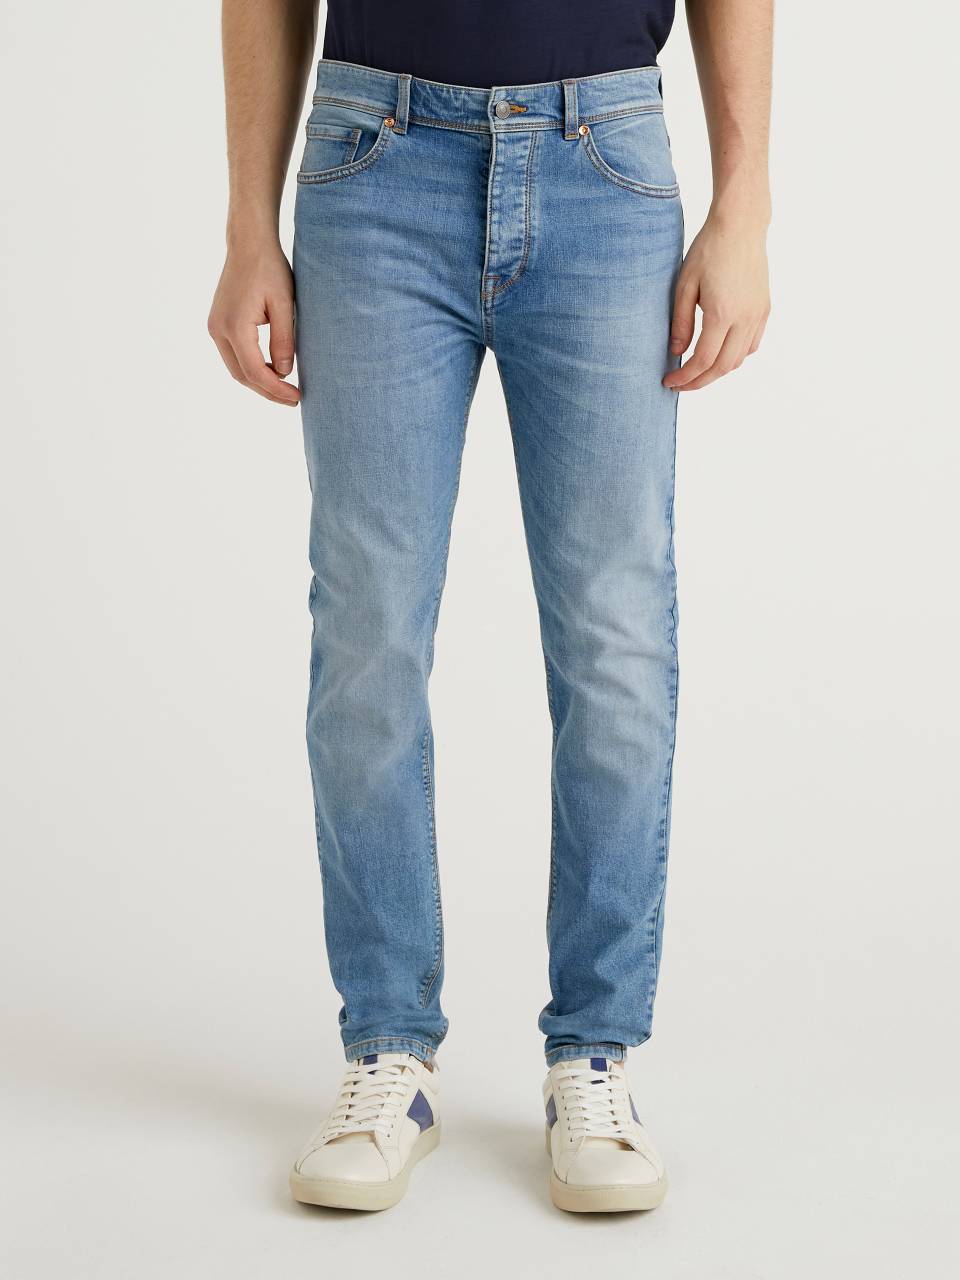 Benetton Skinny fit jeans. 1